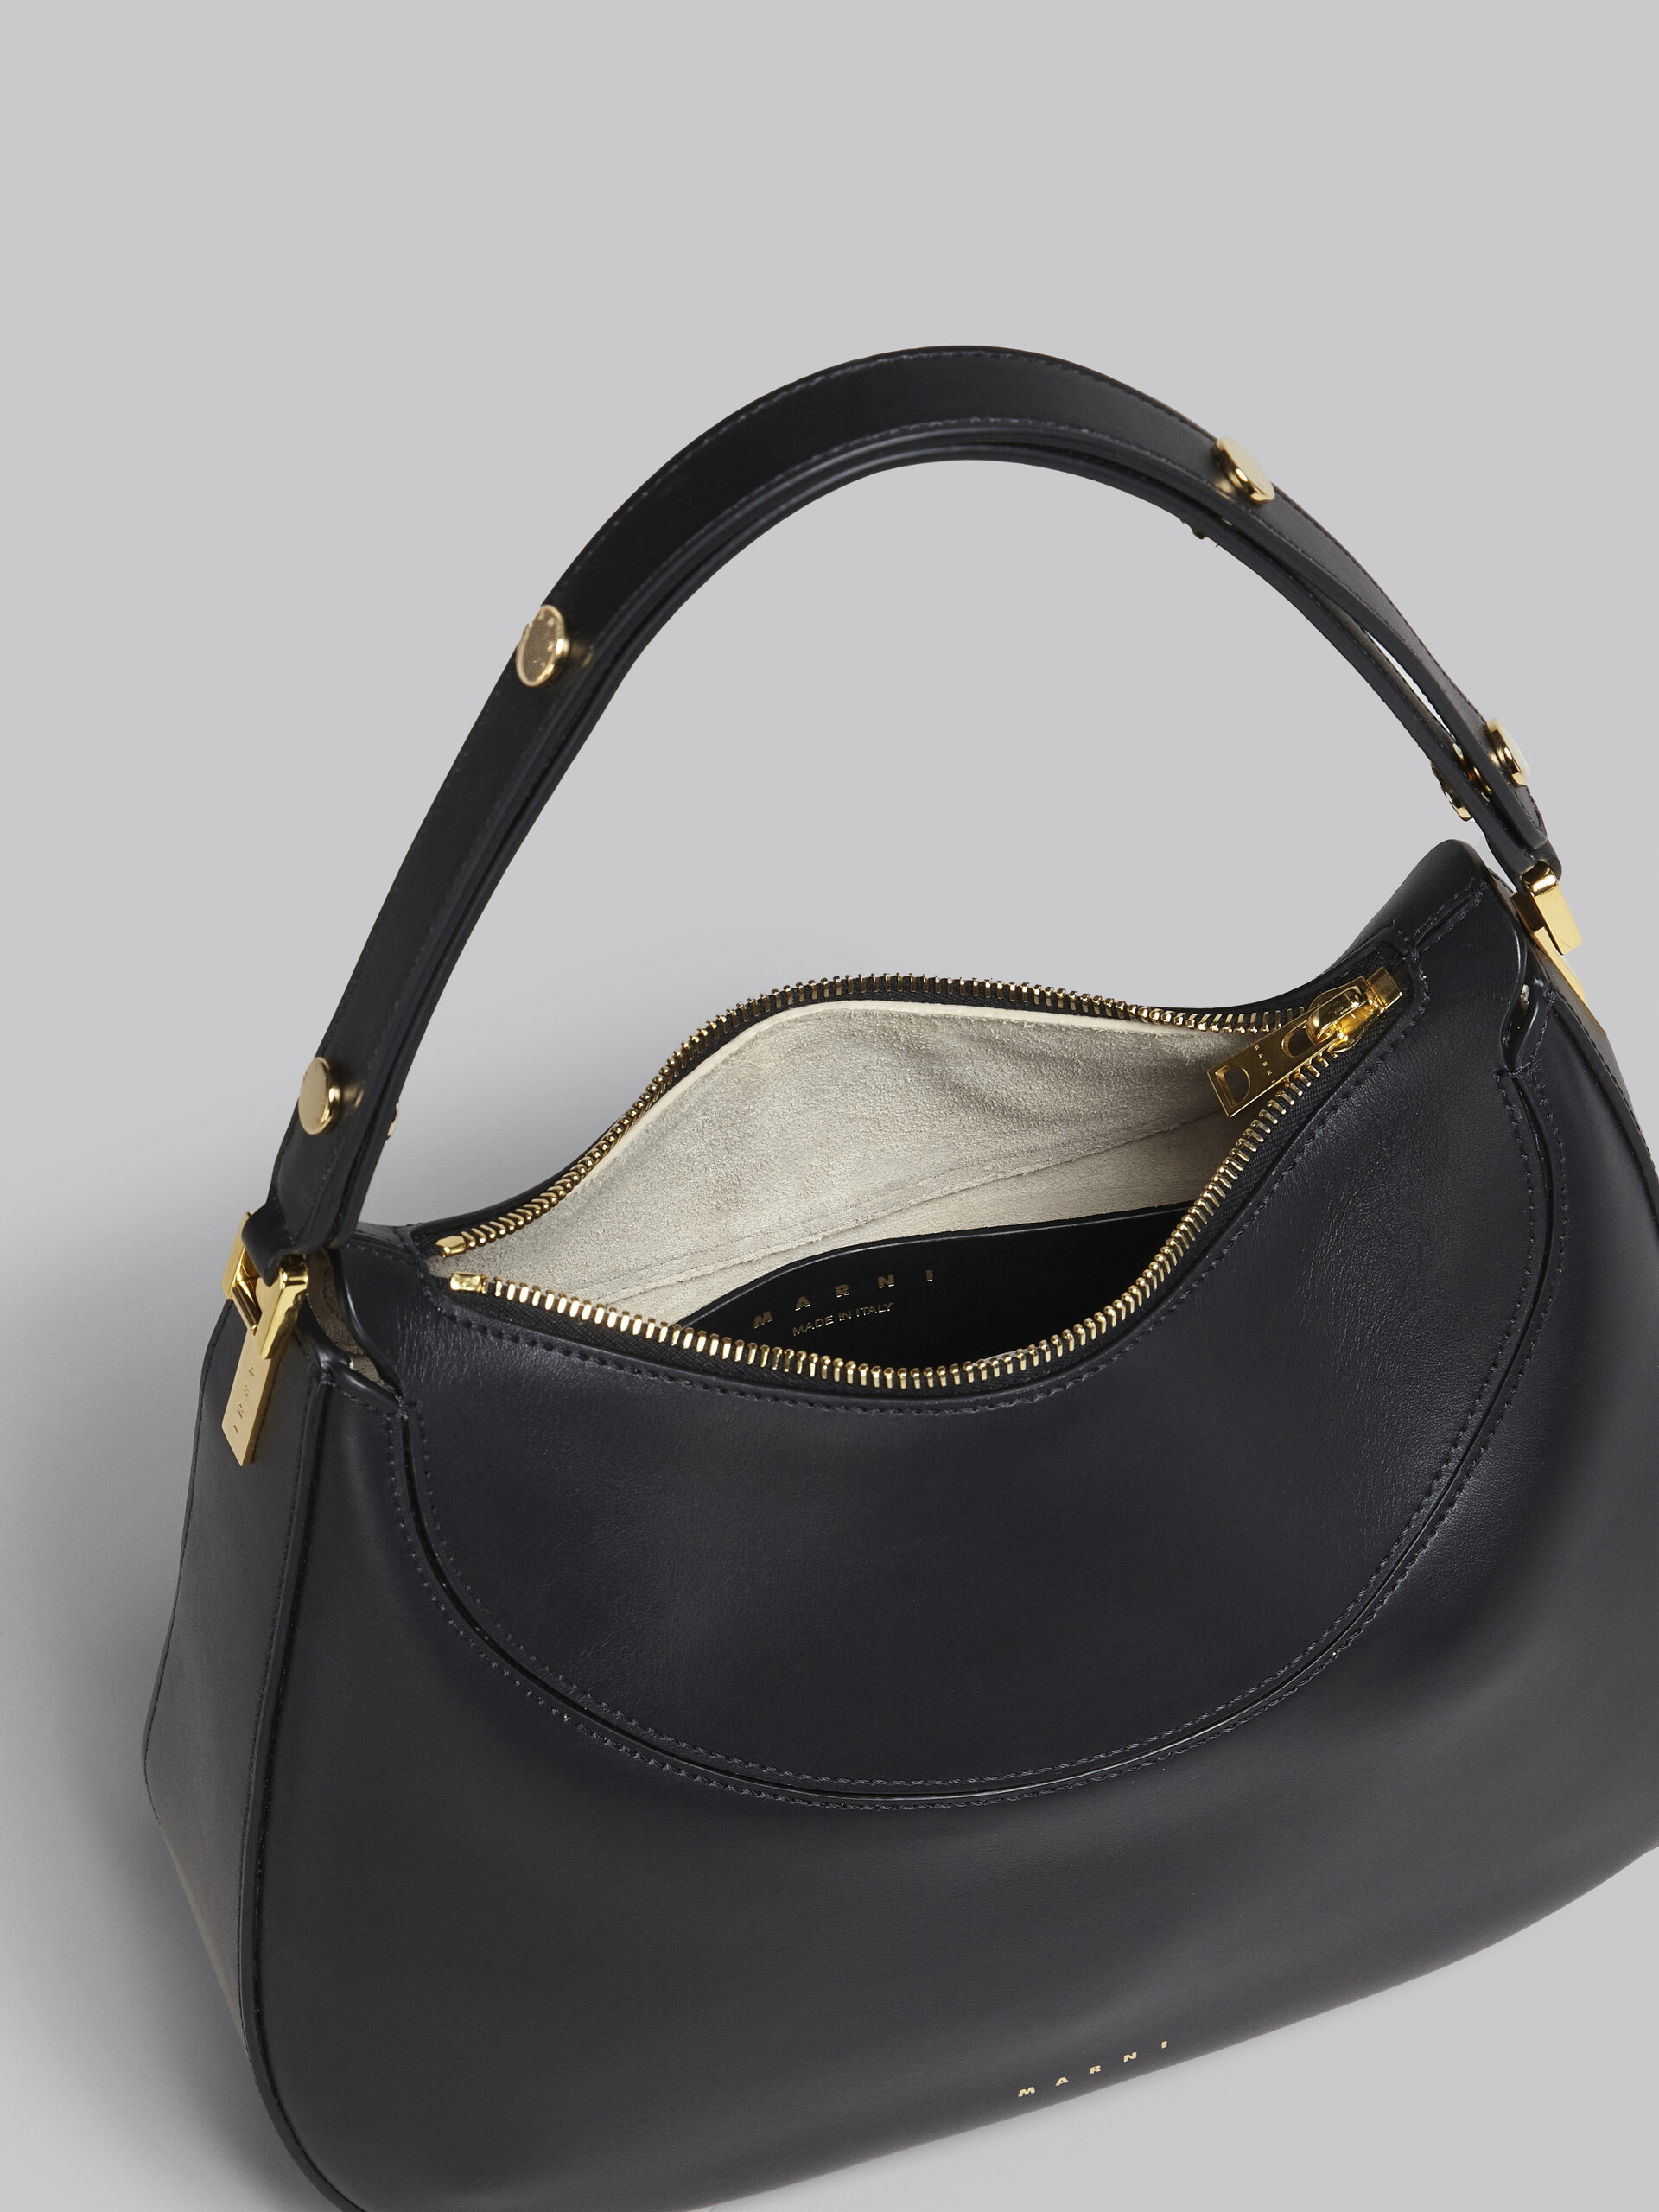 Milano large bag in black leather - Handbag - Image 4